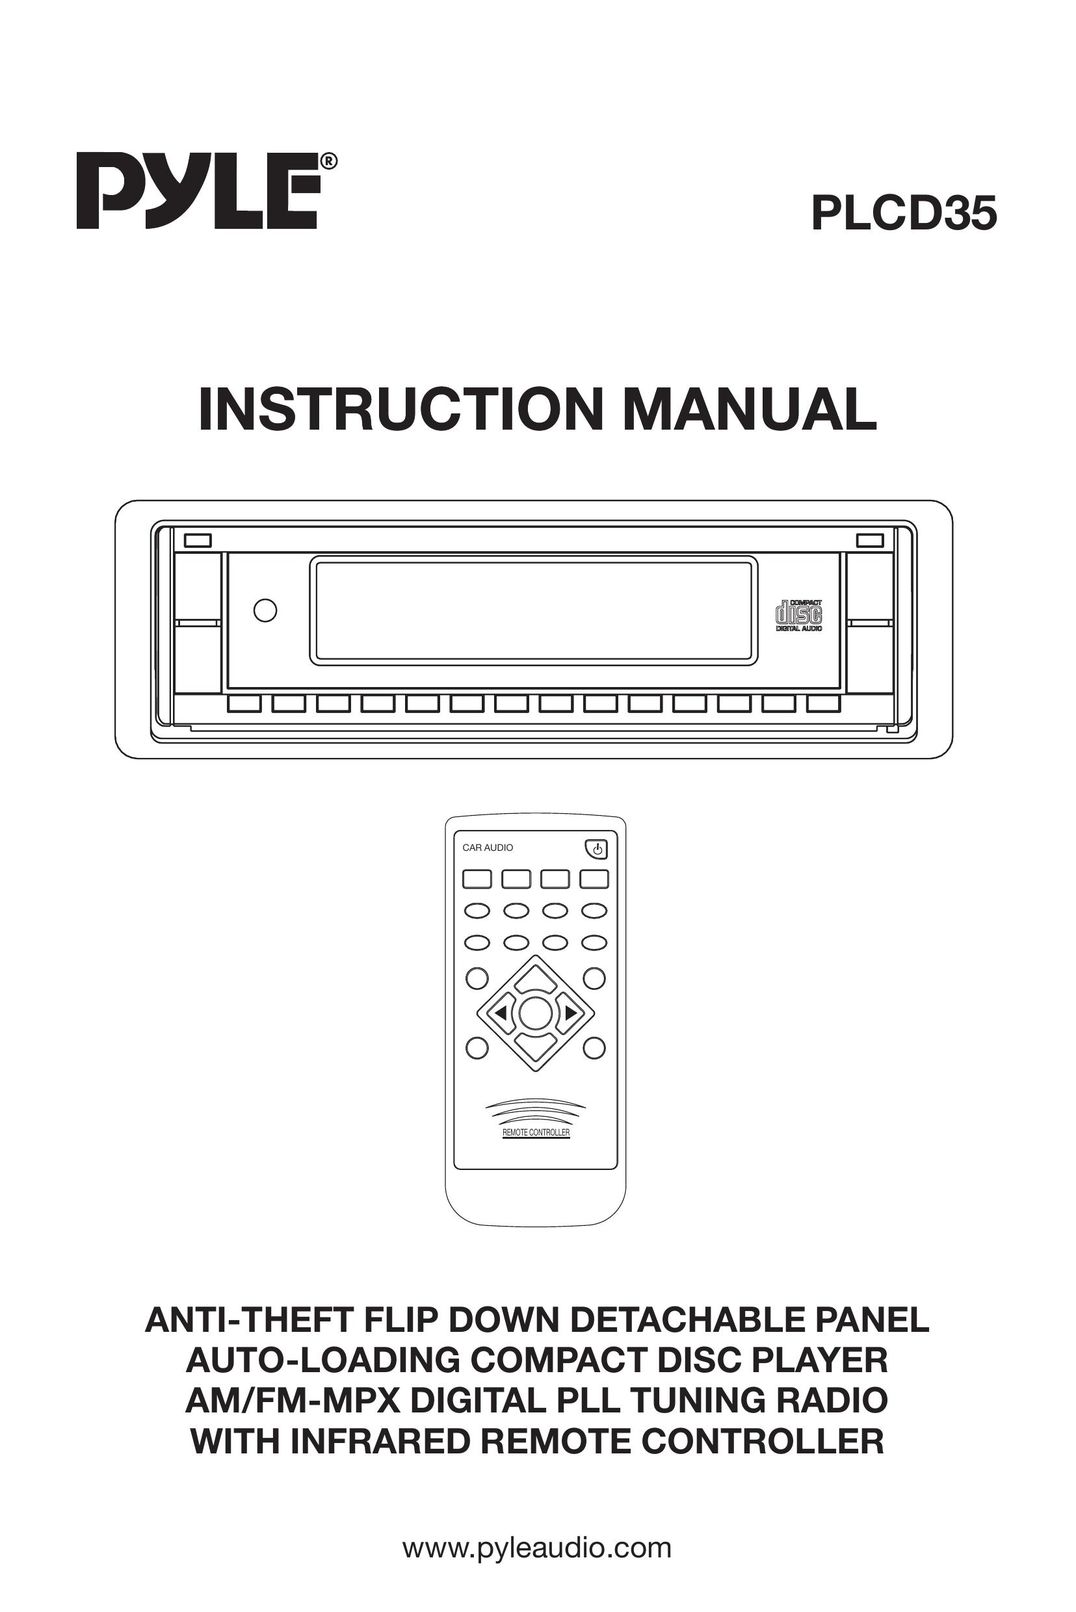 Radio Shack PLCD35 Universal Remote User Manual